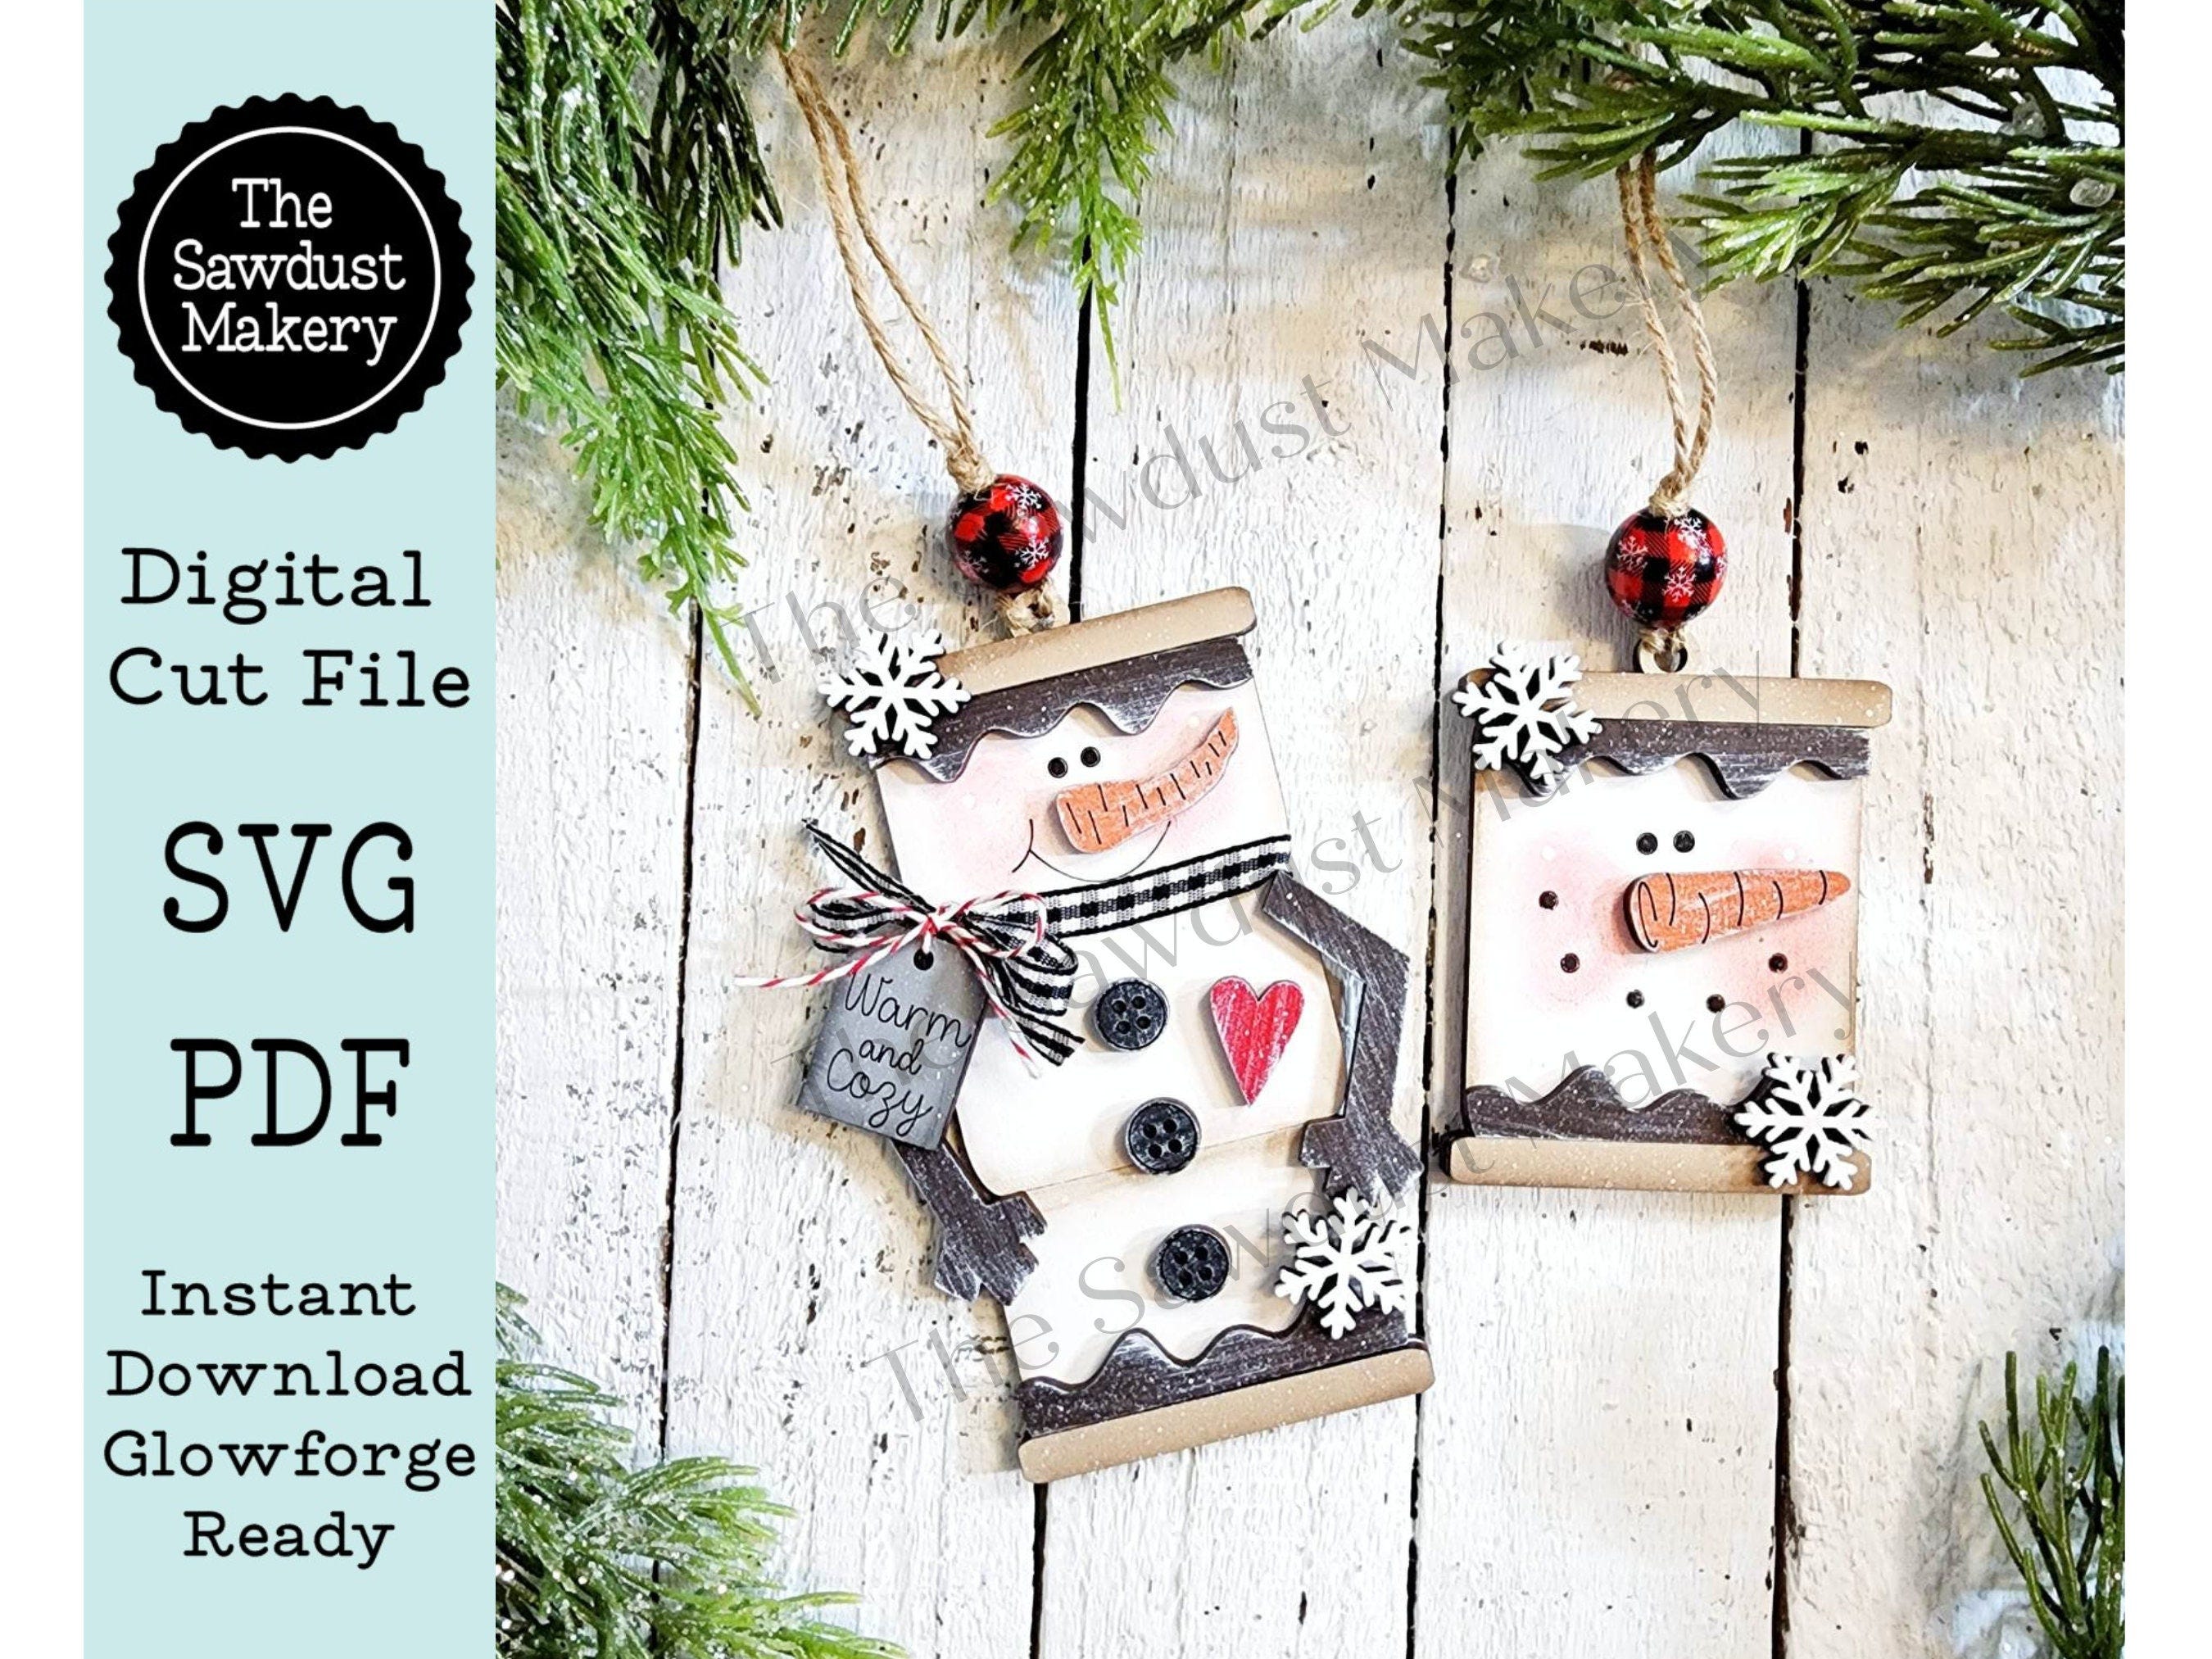 Marshmallow Snowman Christmas Ornament SVG File | Laser Cut File | Christmas Ornament SVG | Snowman Ornament svg | Smores Ornament svg